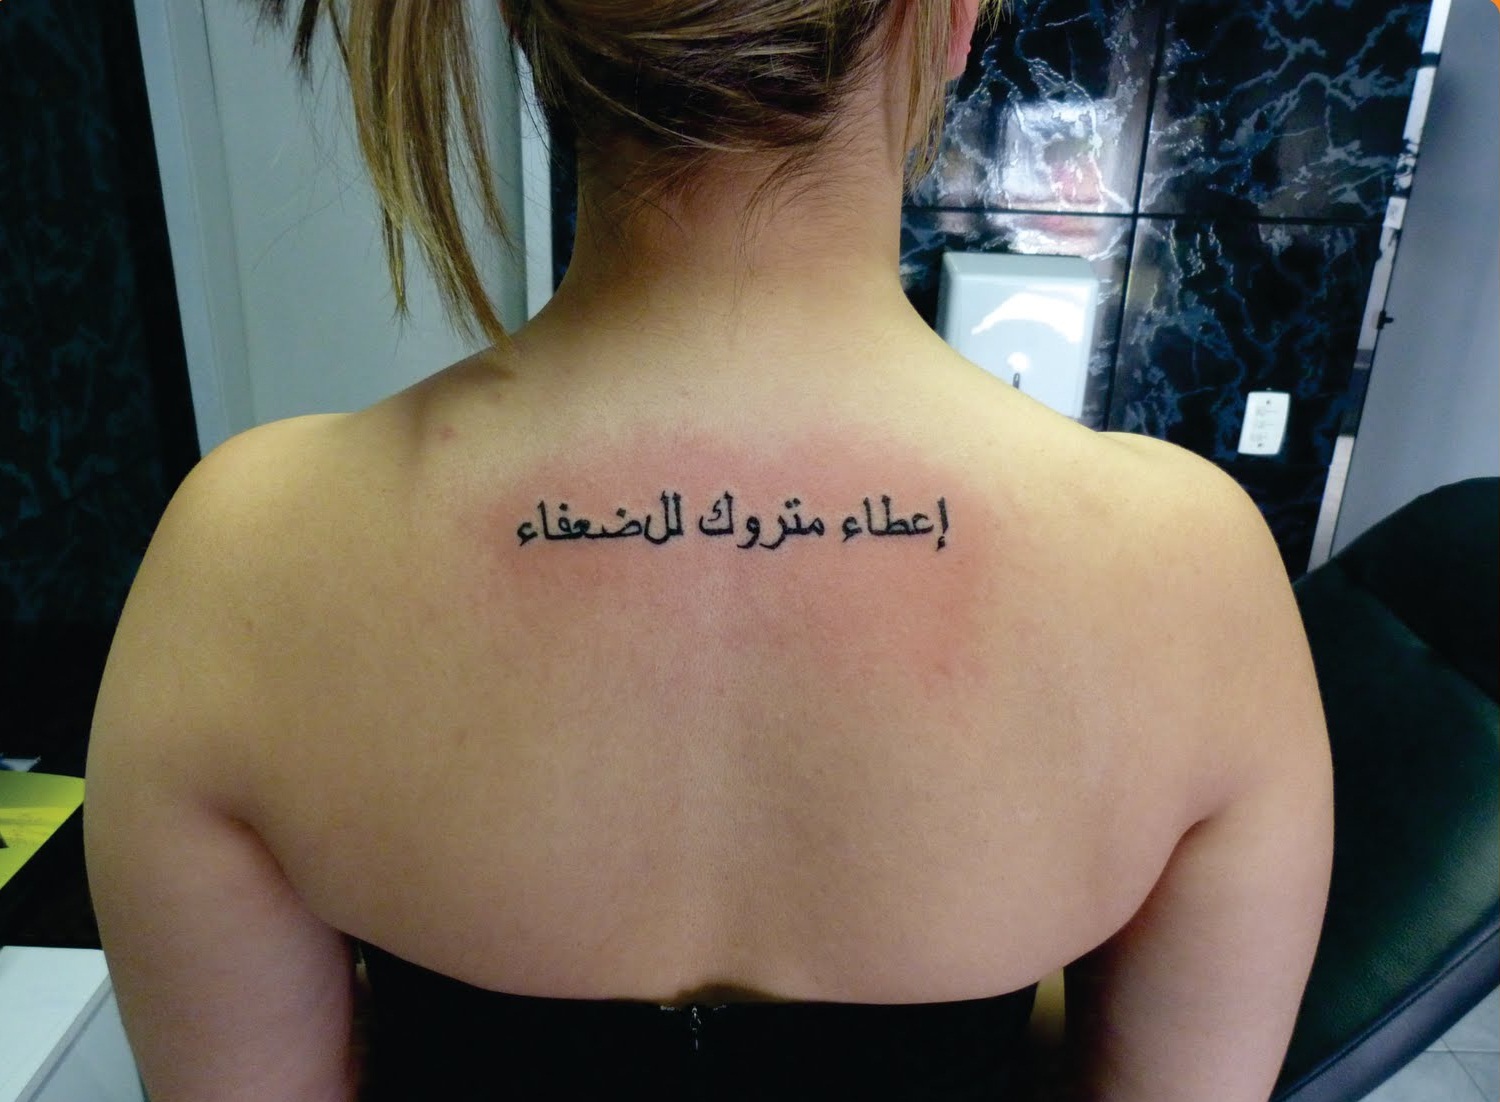 Spine Tattoos In Arabic